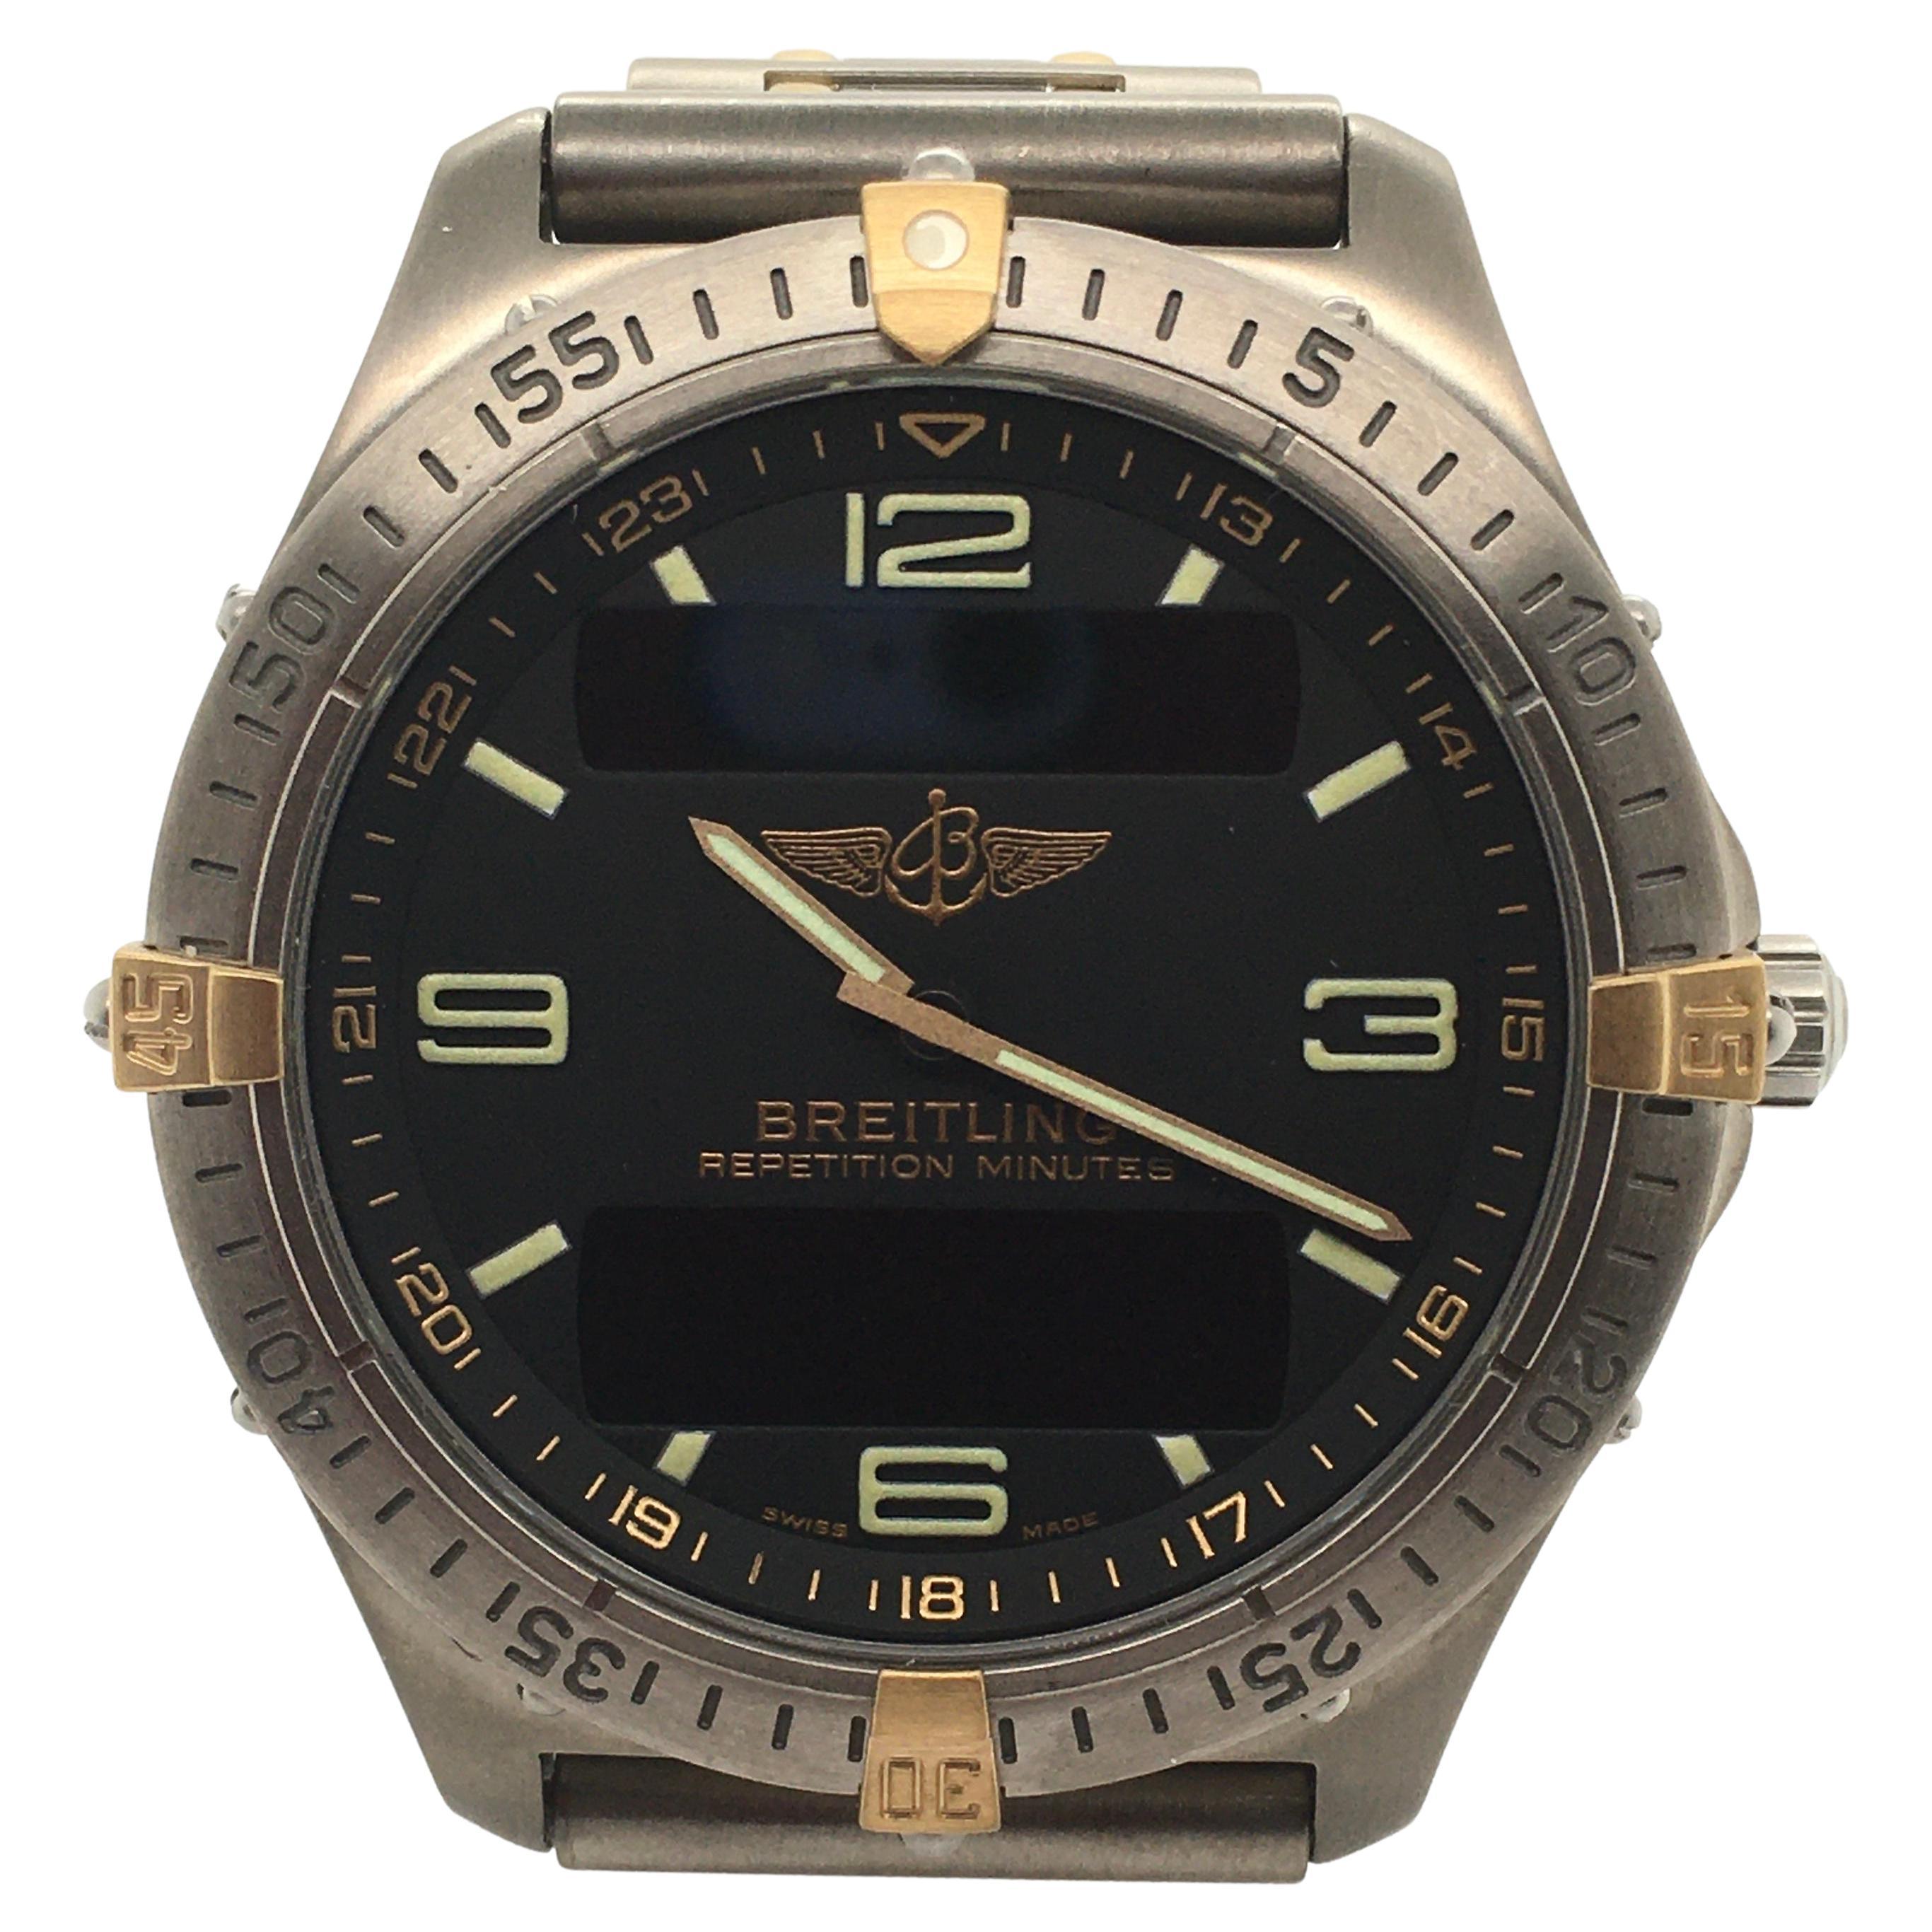 Breitling Aerospace 100m Titanium Case & Bracelet W/ Black Dial Chronograph 